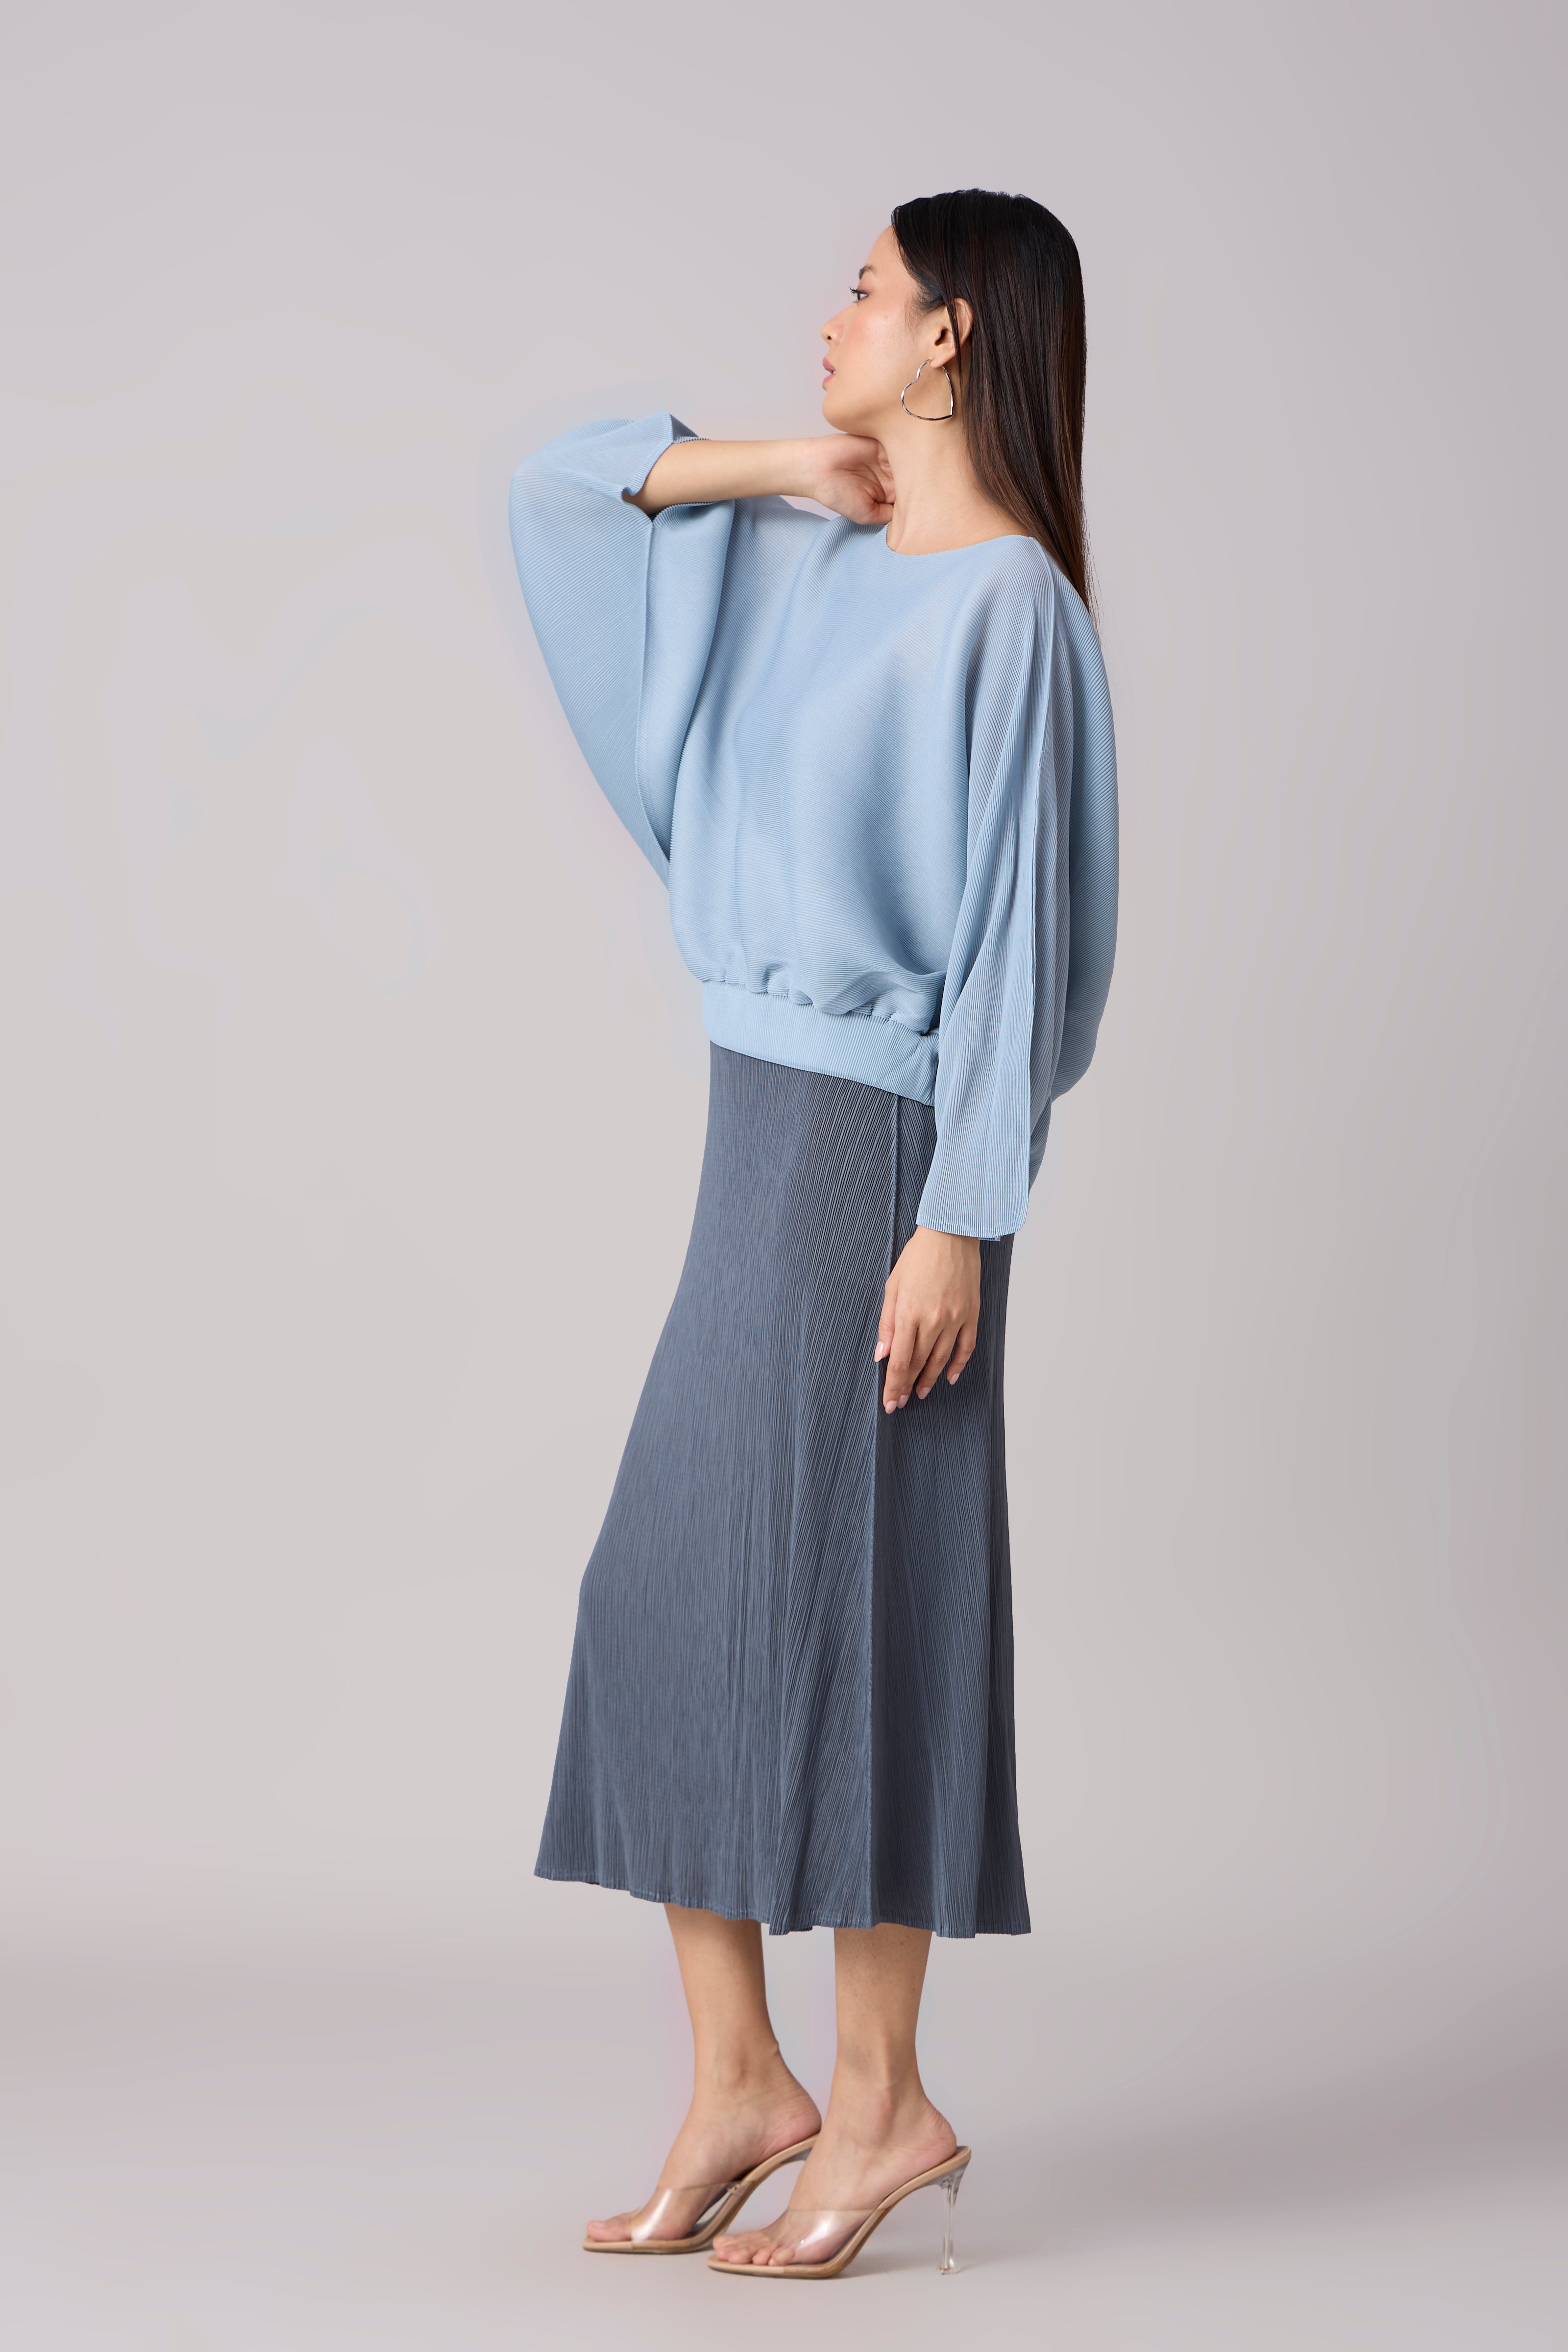 Willa + Cami Dress Set - Blue Grey